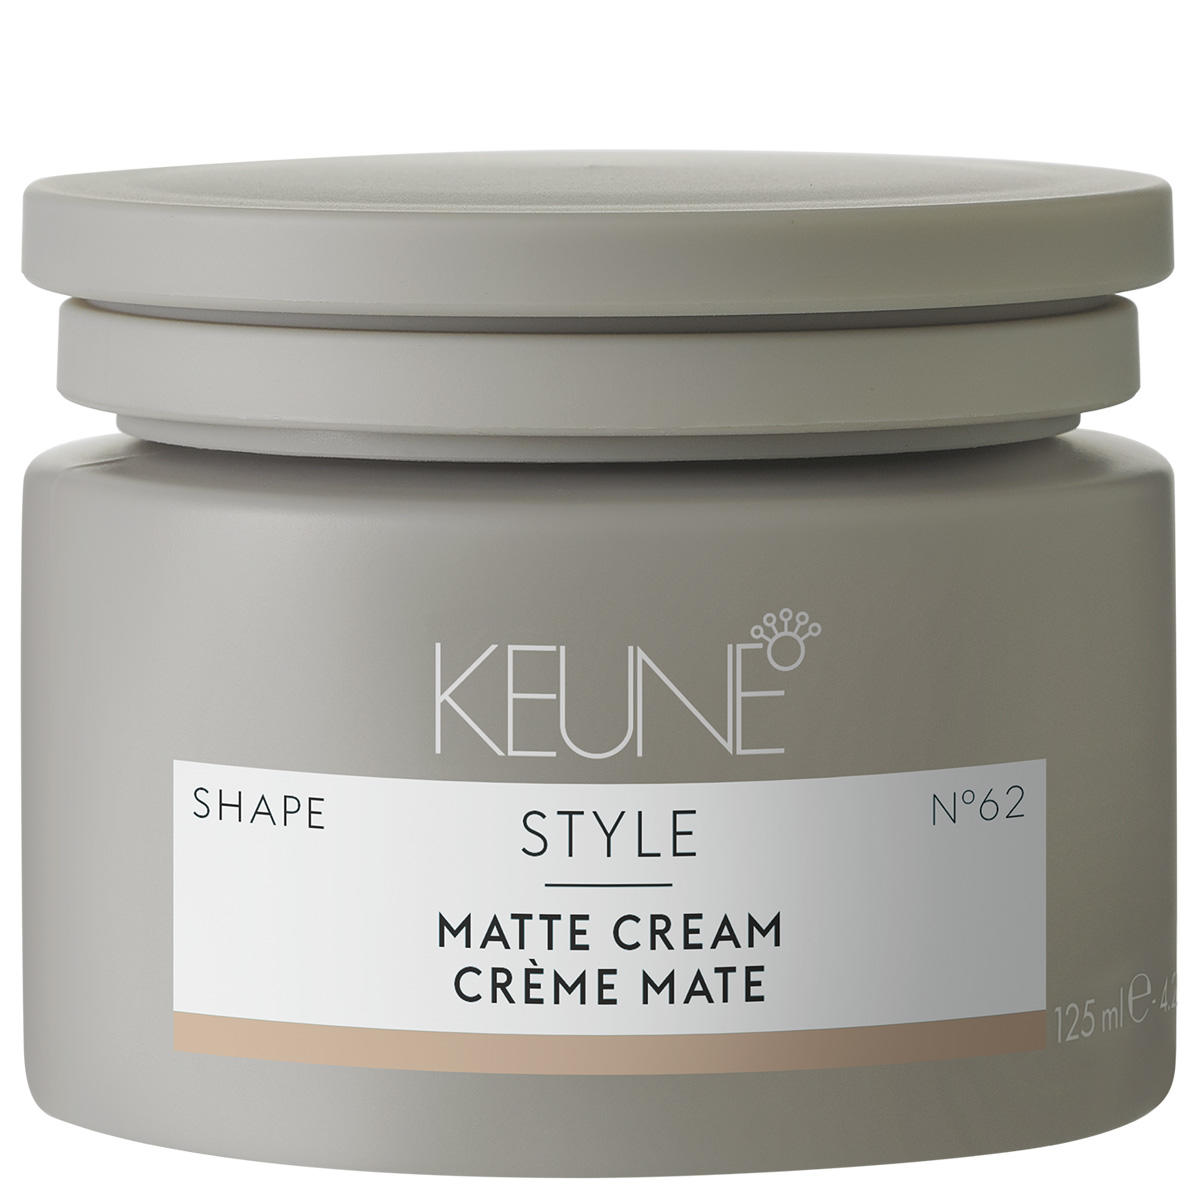 KEUNE STYLE Shape Matte Cream mittlerer Halt 125 ml - 1